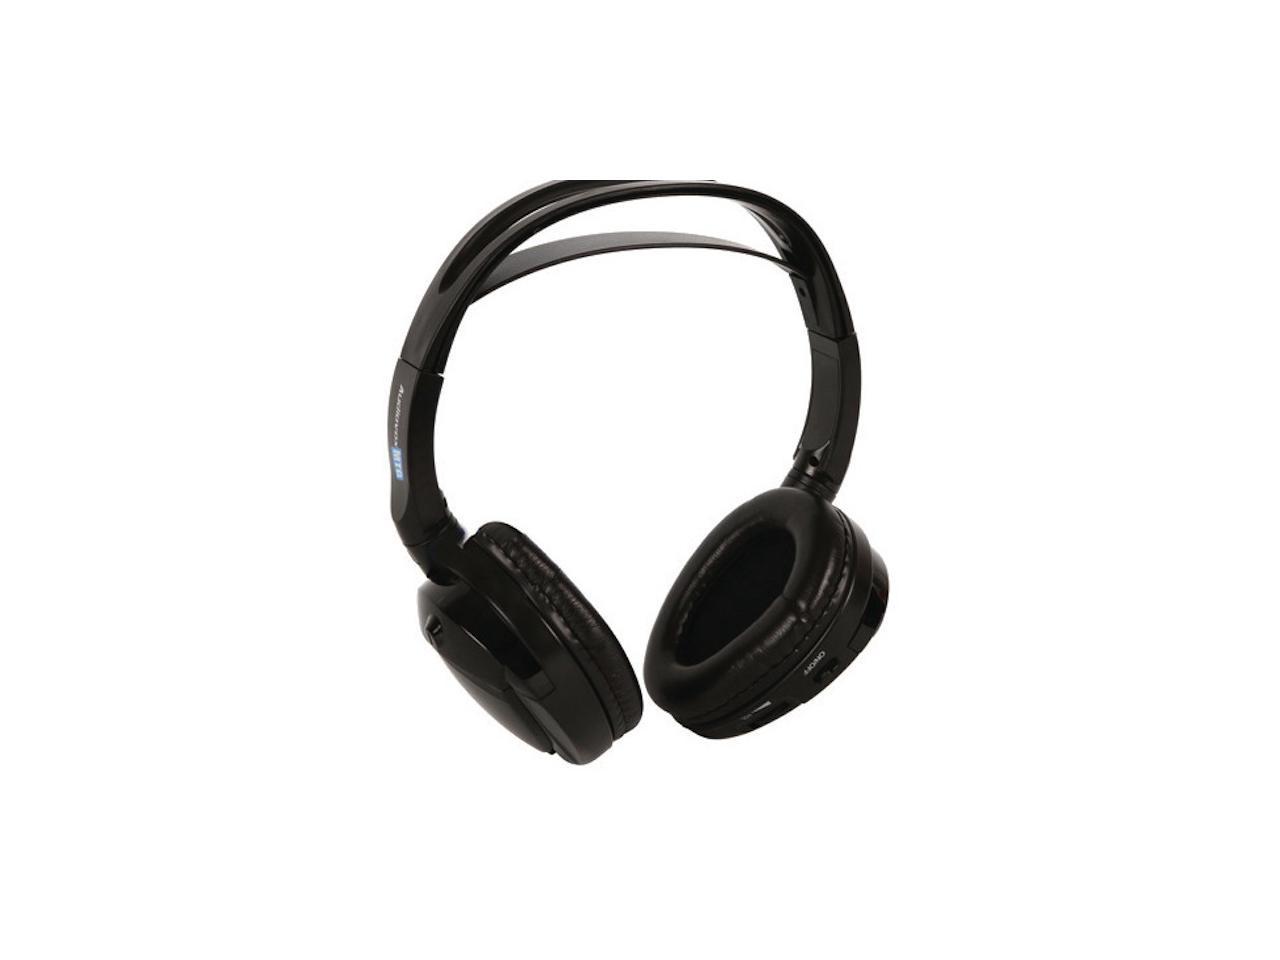 New Audiovox Mtghp1c Single Channel If Wireless Headphones